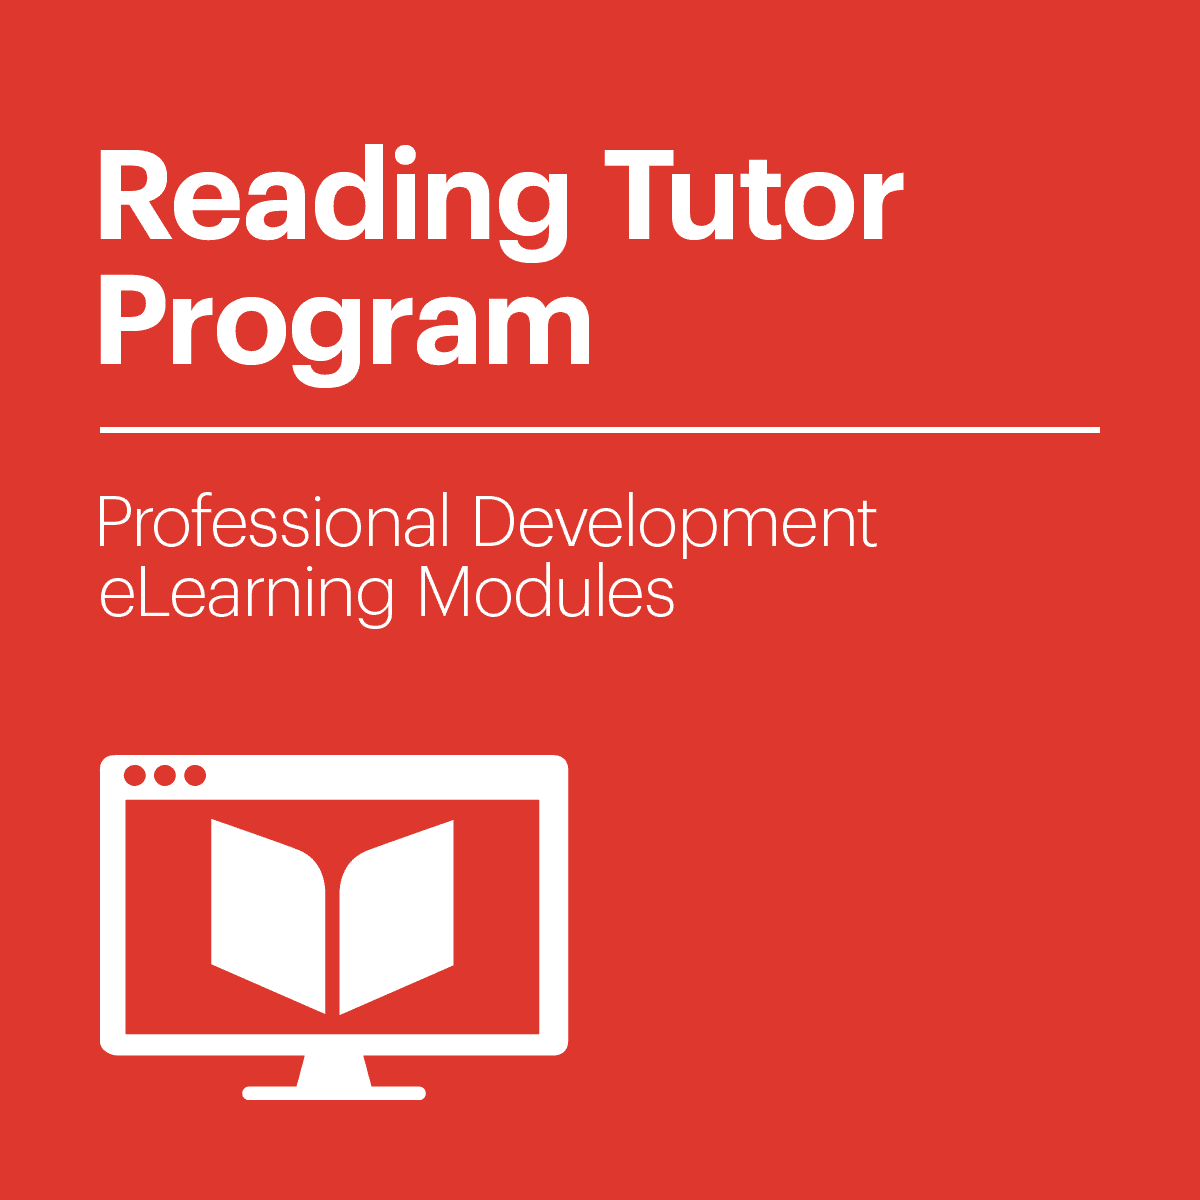 ertp-reading-tutor-program-professional-development-elearning-modules-image01-01